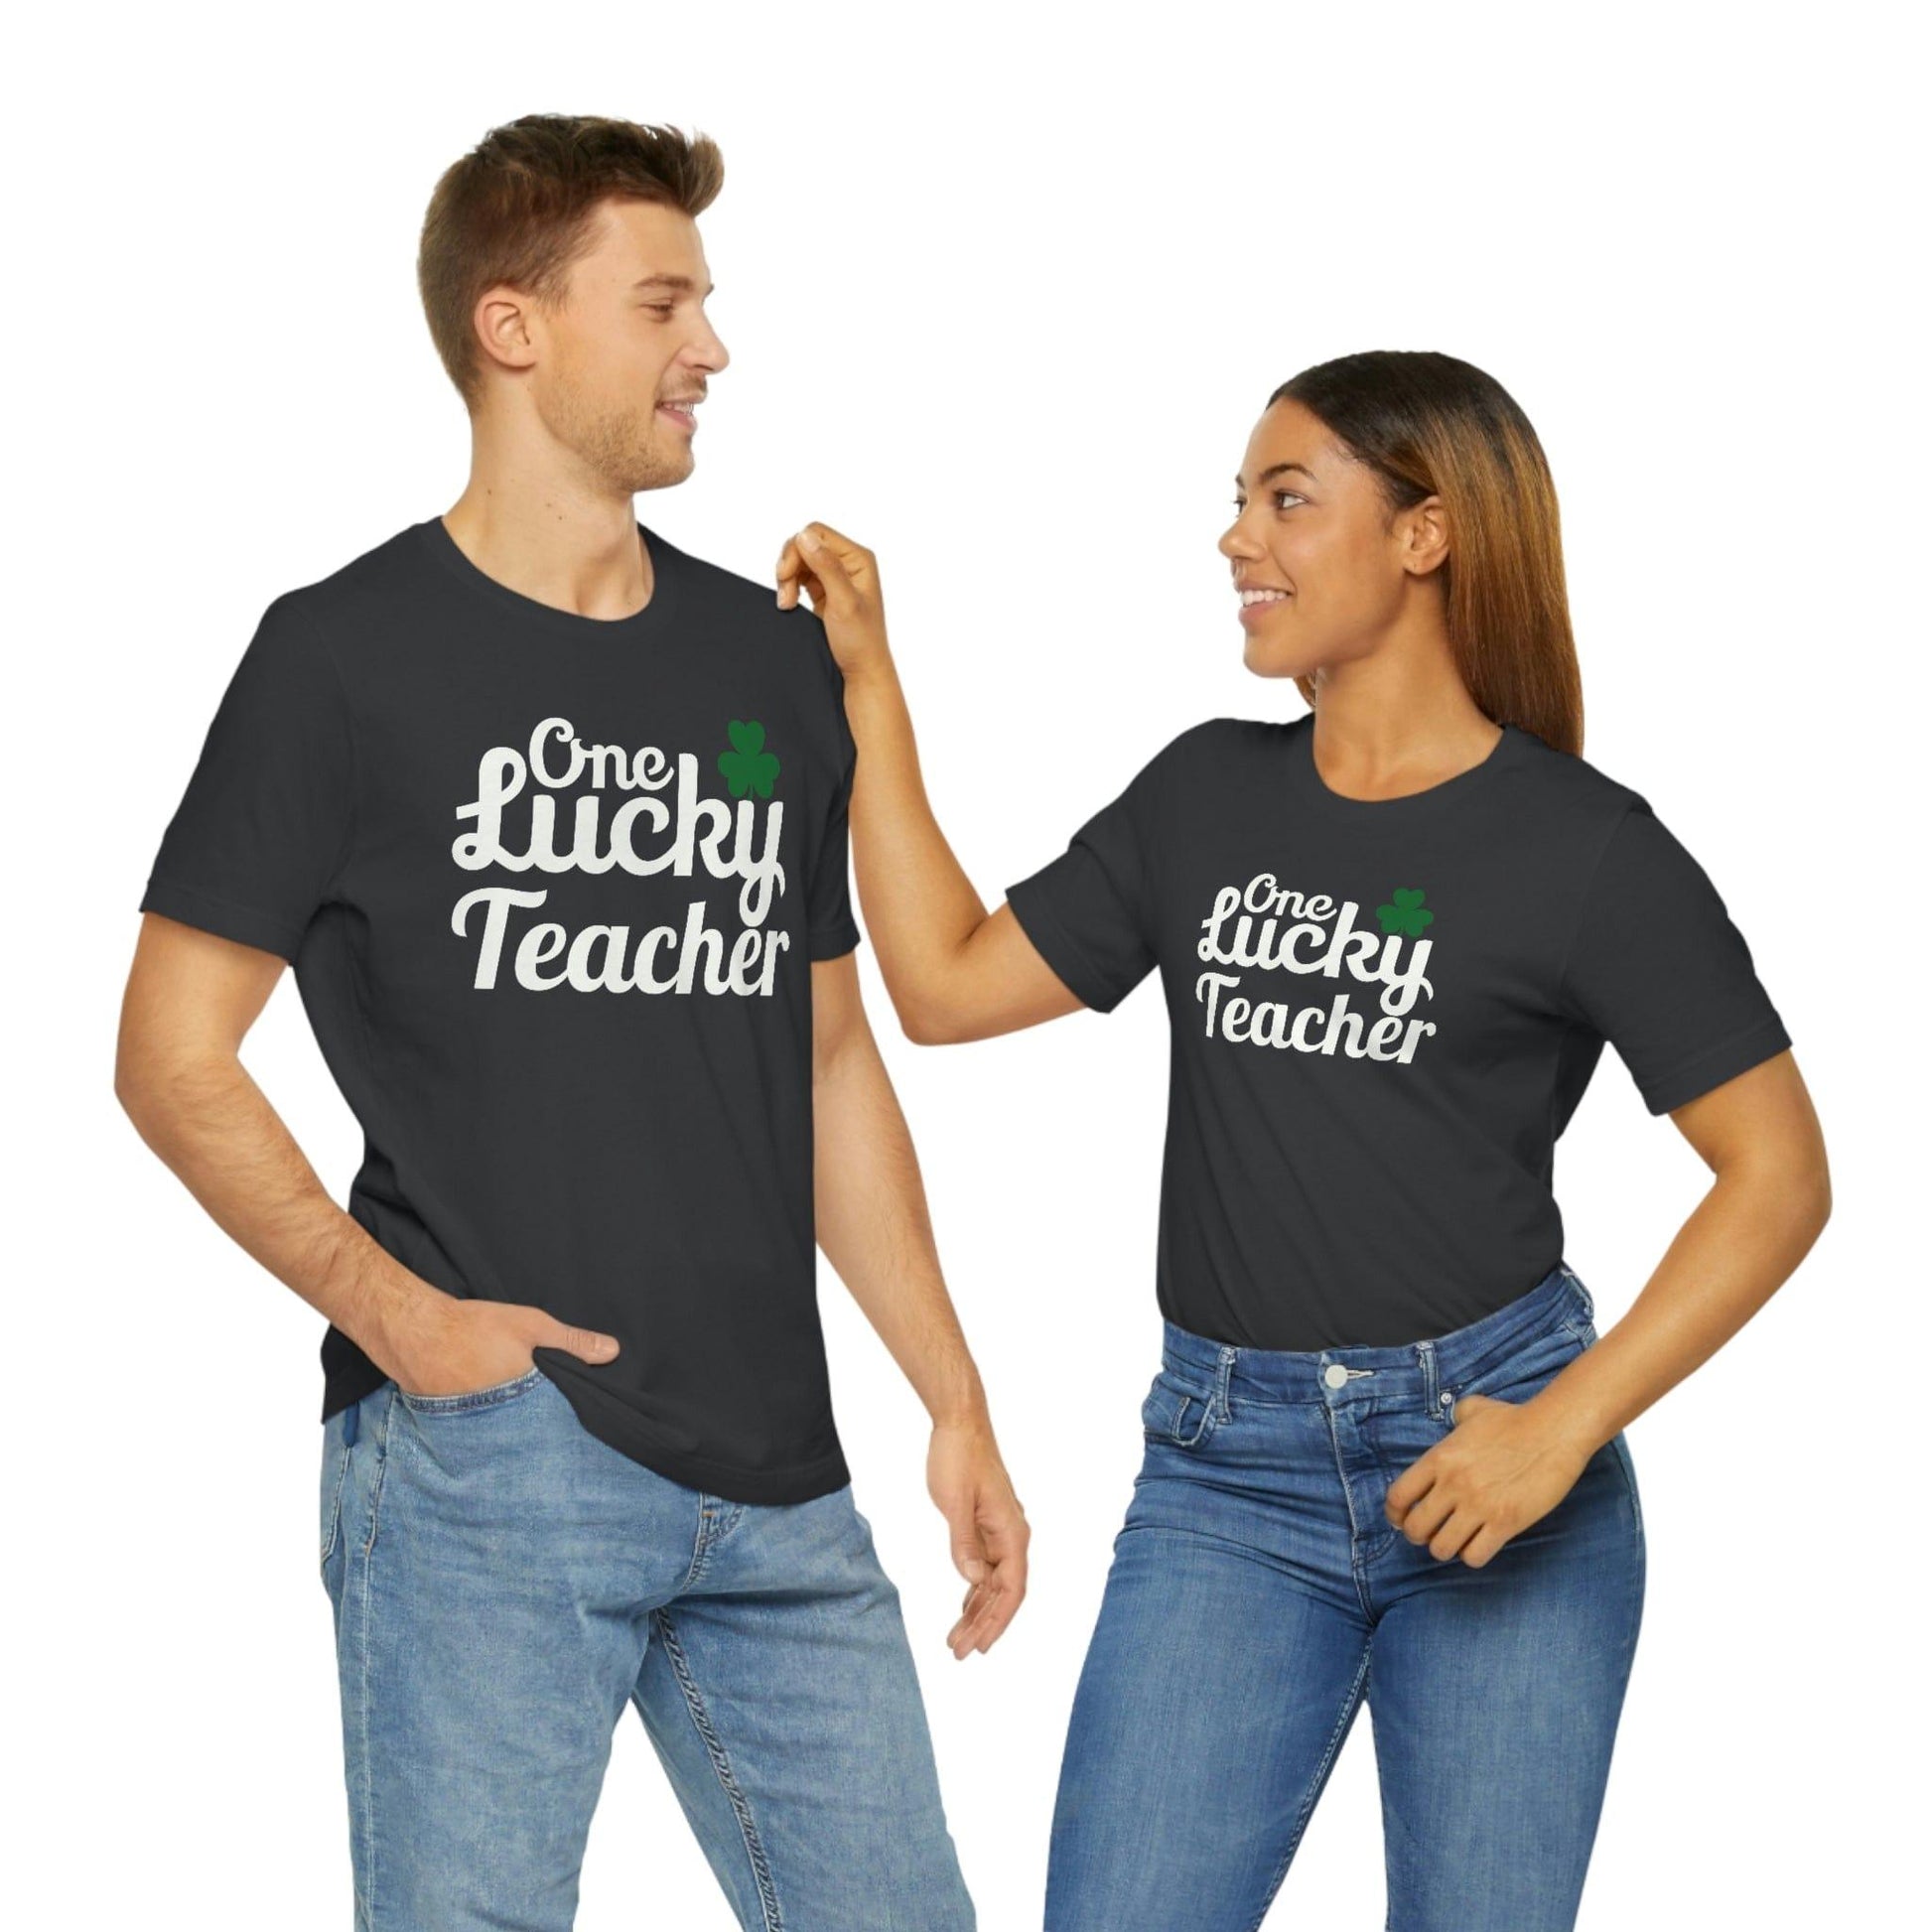 Feeling Lucky Shirt One Lucky Teacher Shirt St Patrick's Day shirt - Funny St Paddy's day Funny Shirt Shamrock shirt shenanigans shirt - Giftsmojo